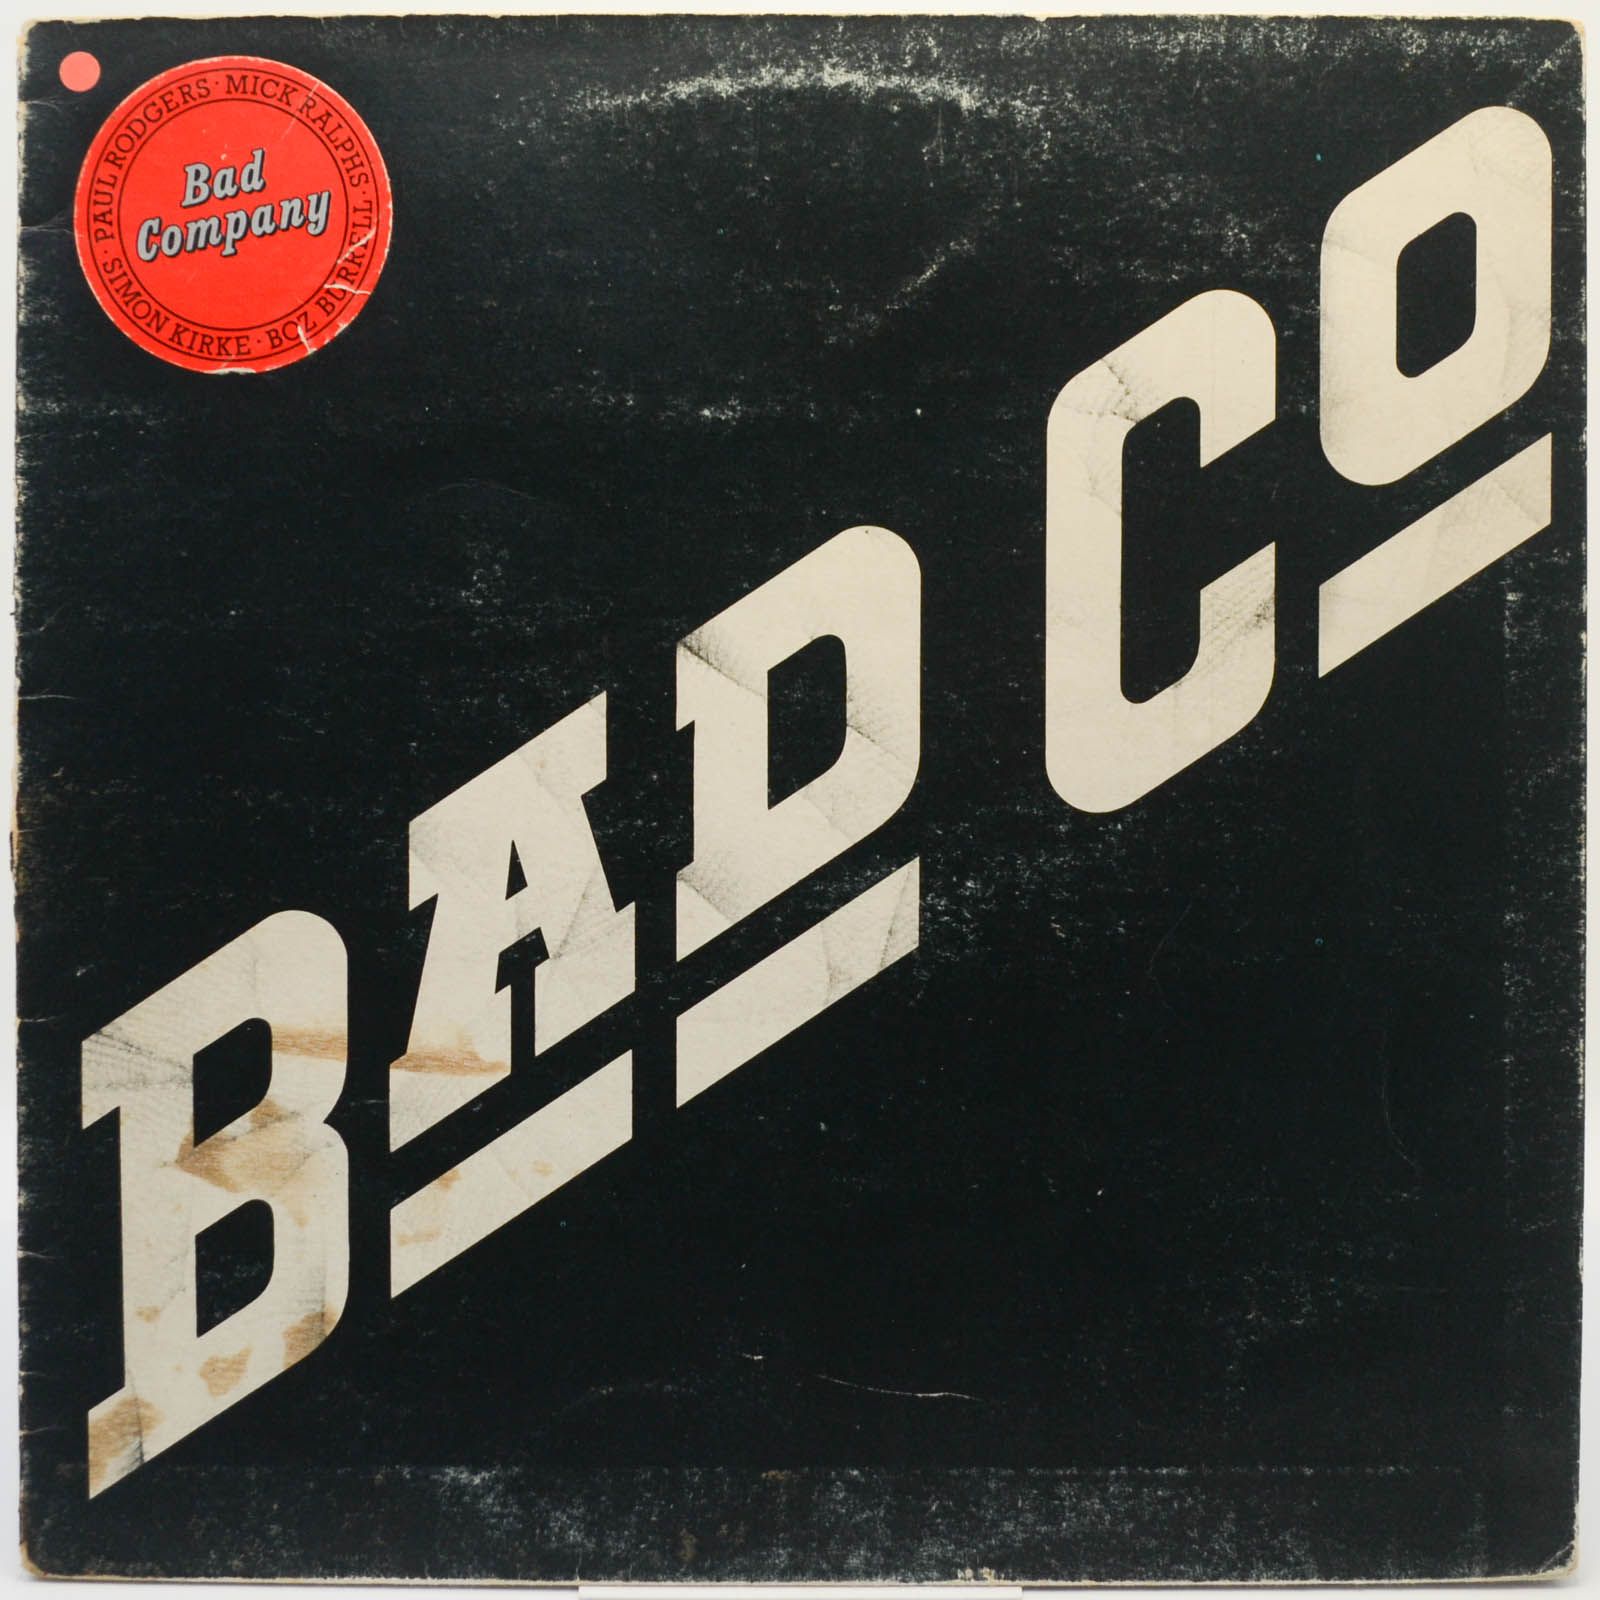 Bad Co — Bad Company (1-st, UK), 1974